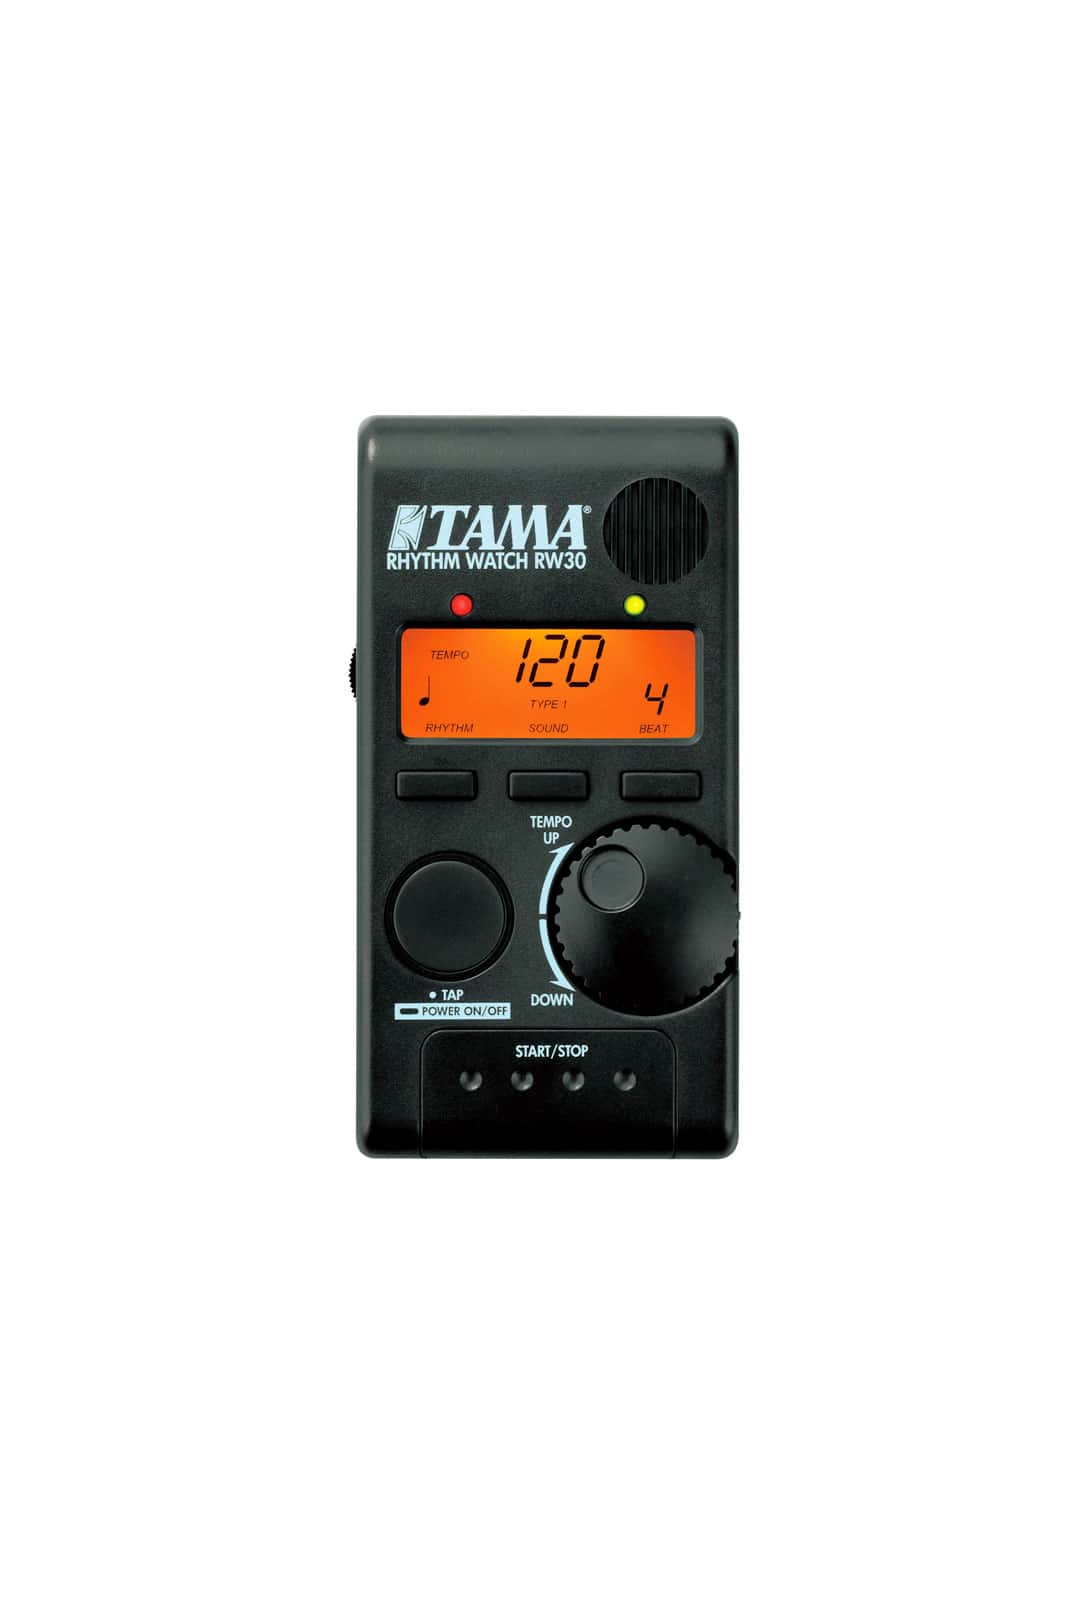 Tama Rw30 Rhythm Watch Programmable